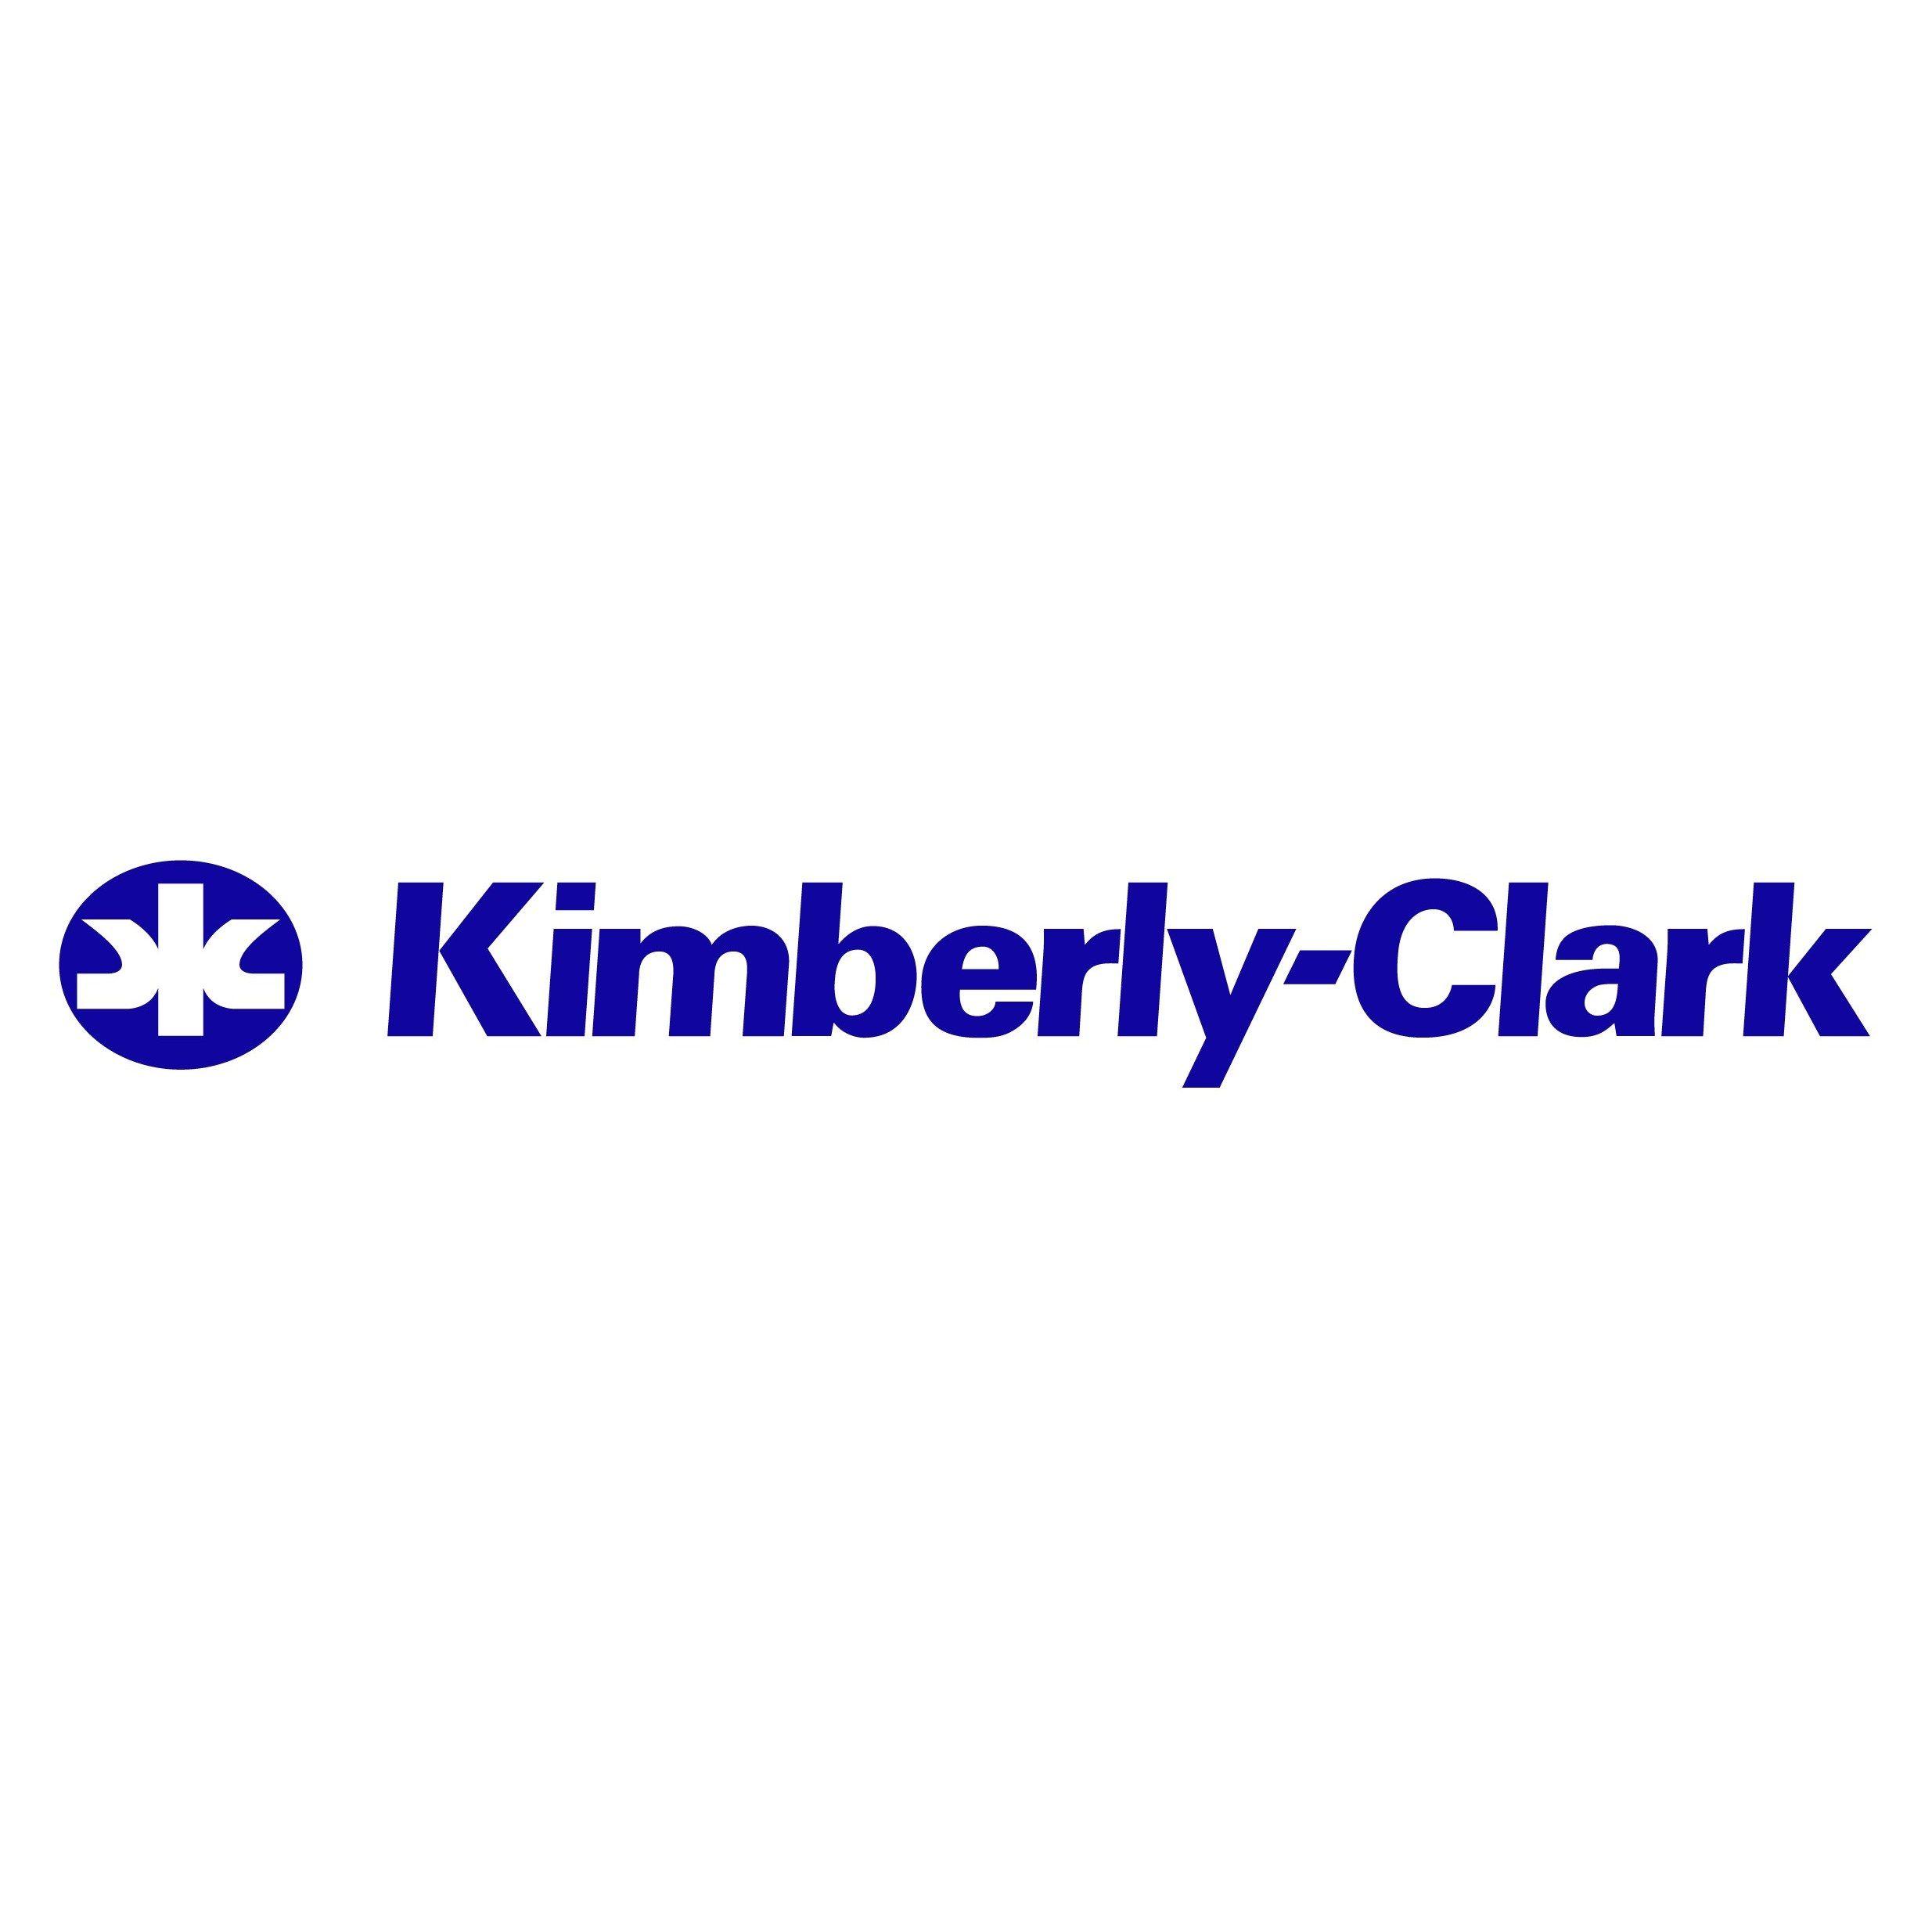 Kimberly-Clark Logo - Kimberly-Clark on a Mission for Period Progress on Menstrual Hygiene Day